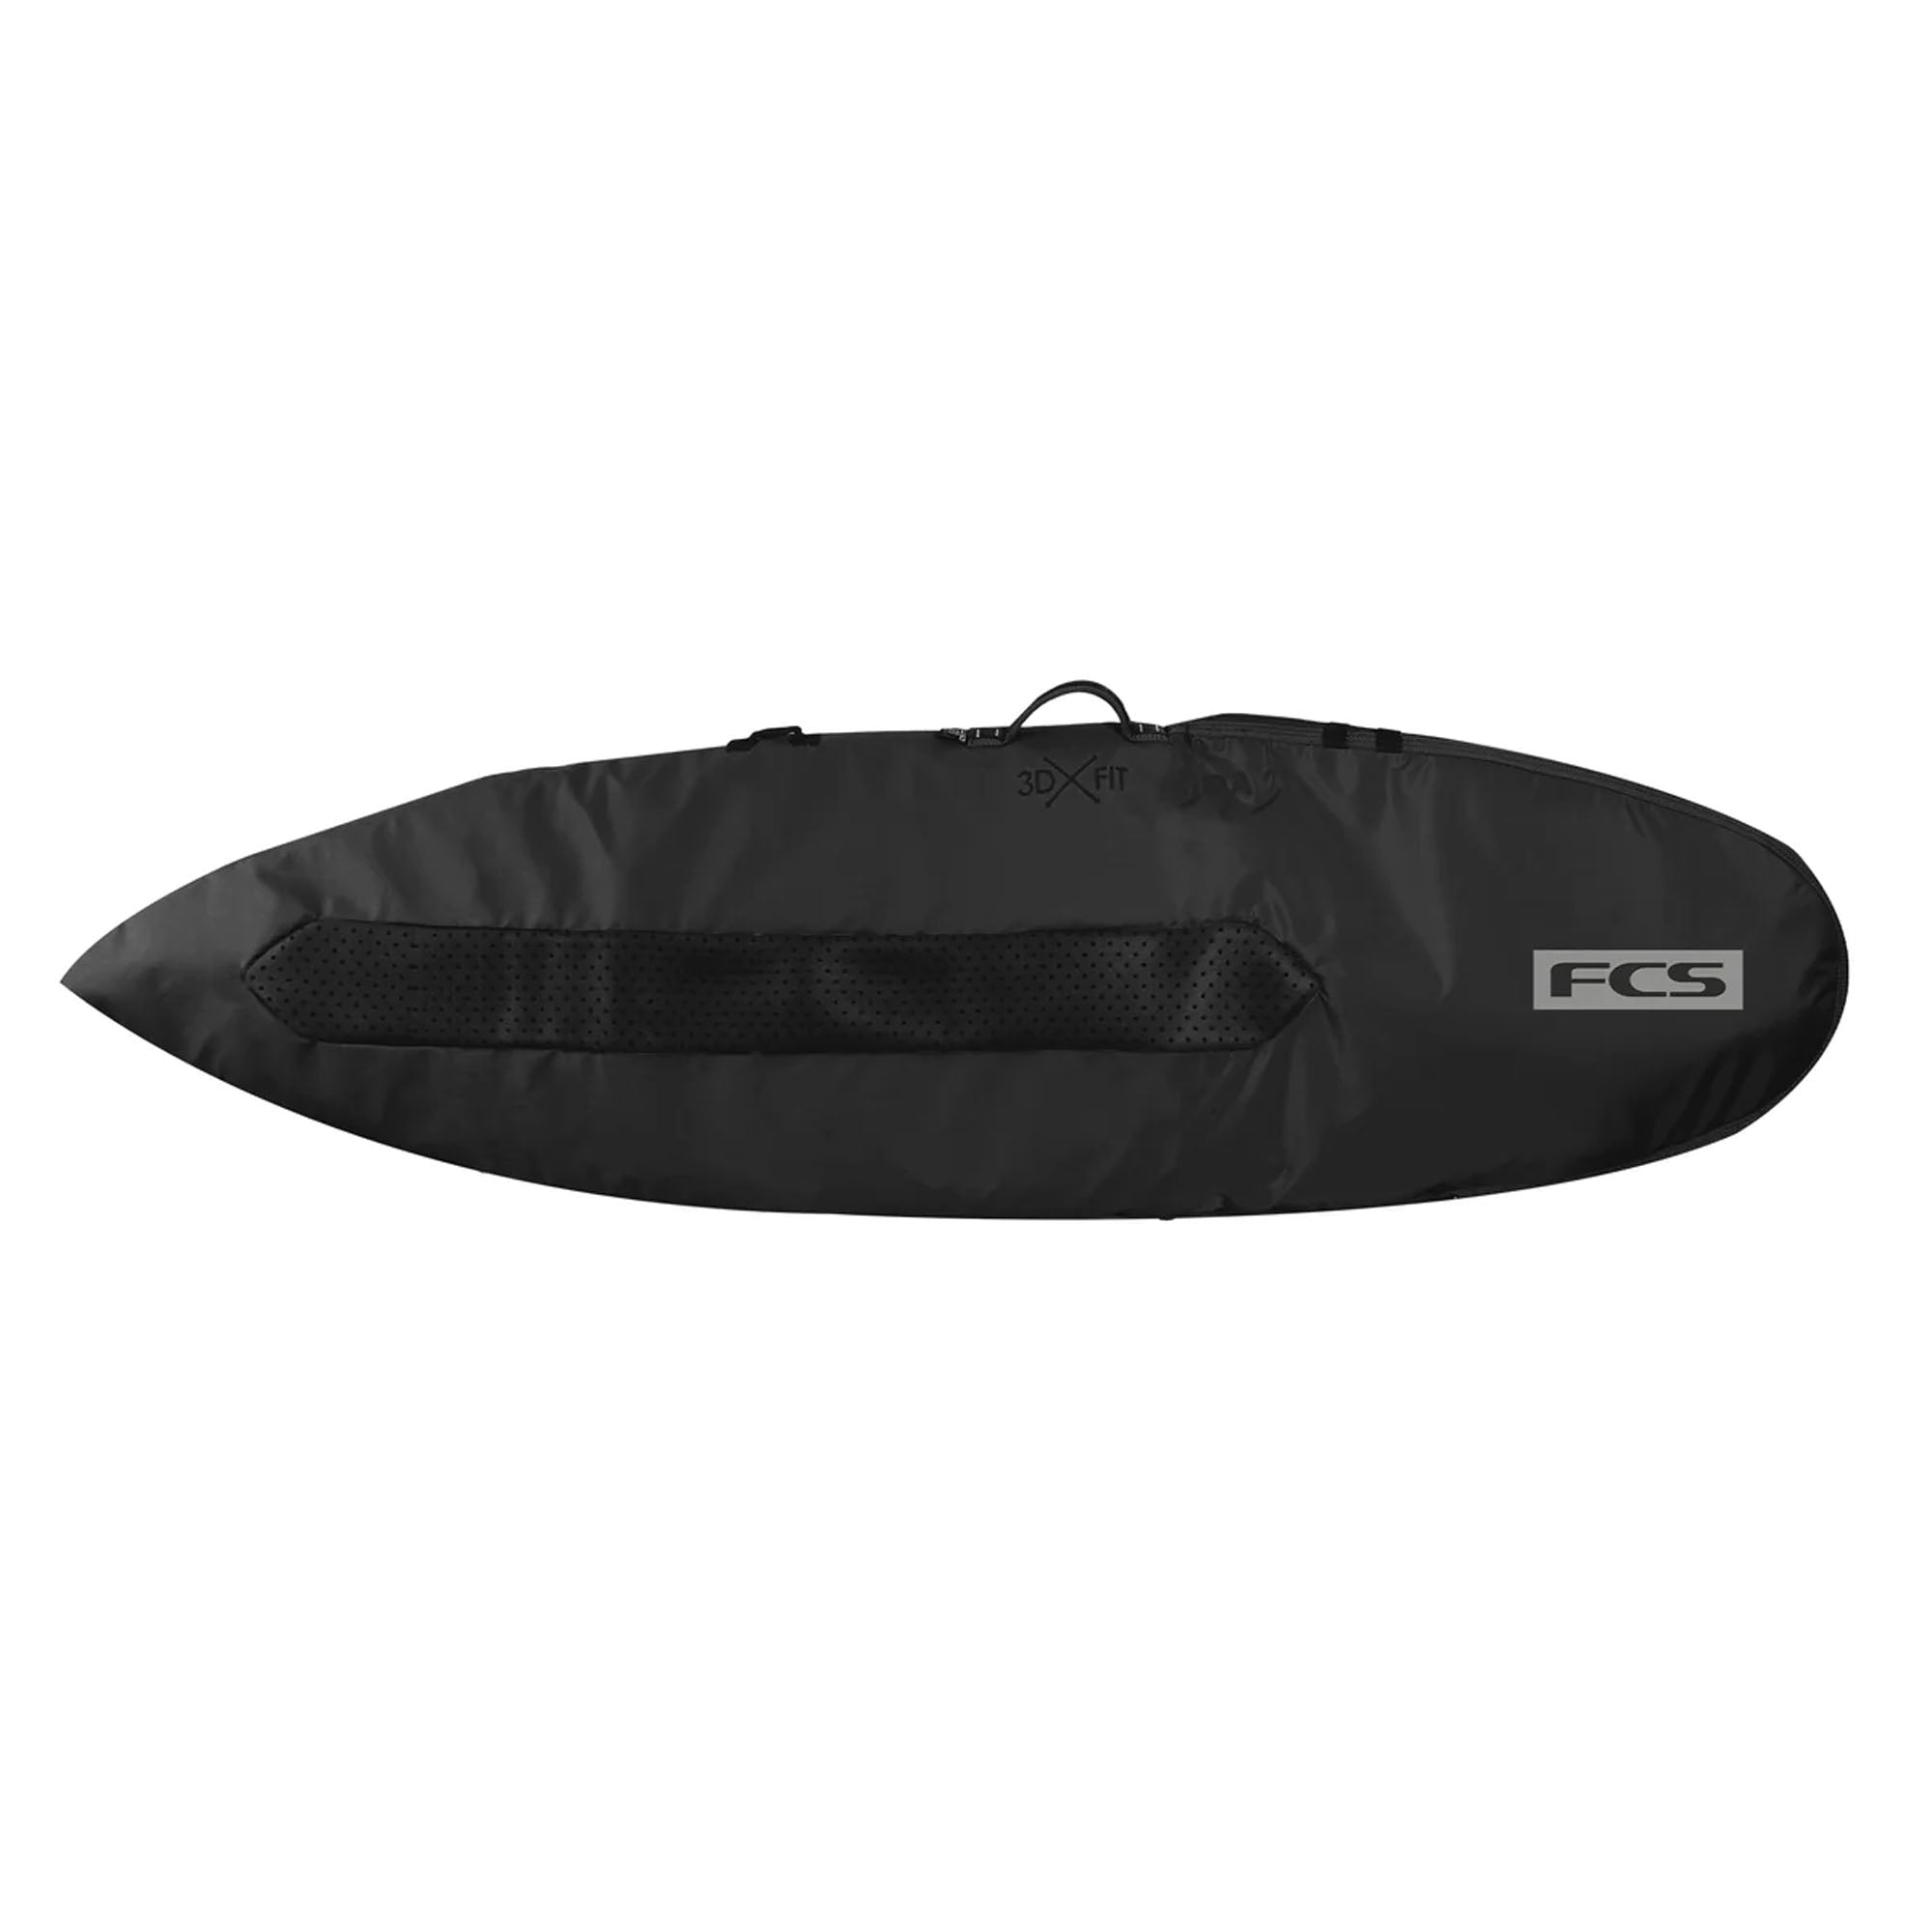 FCS Surfboard Bags